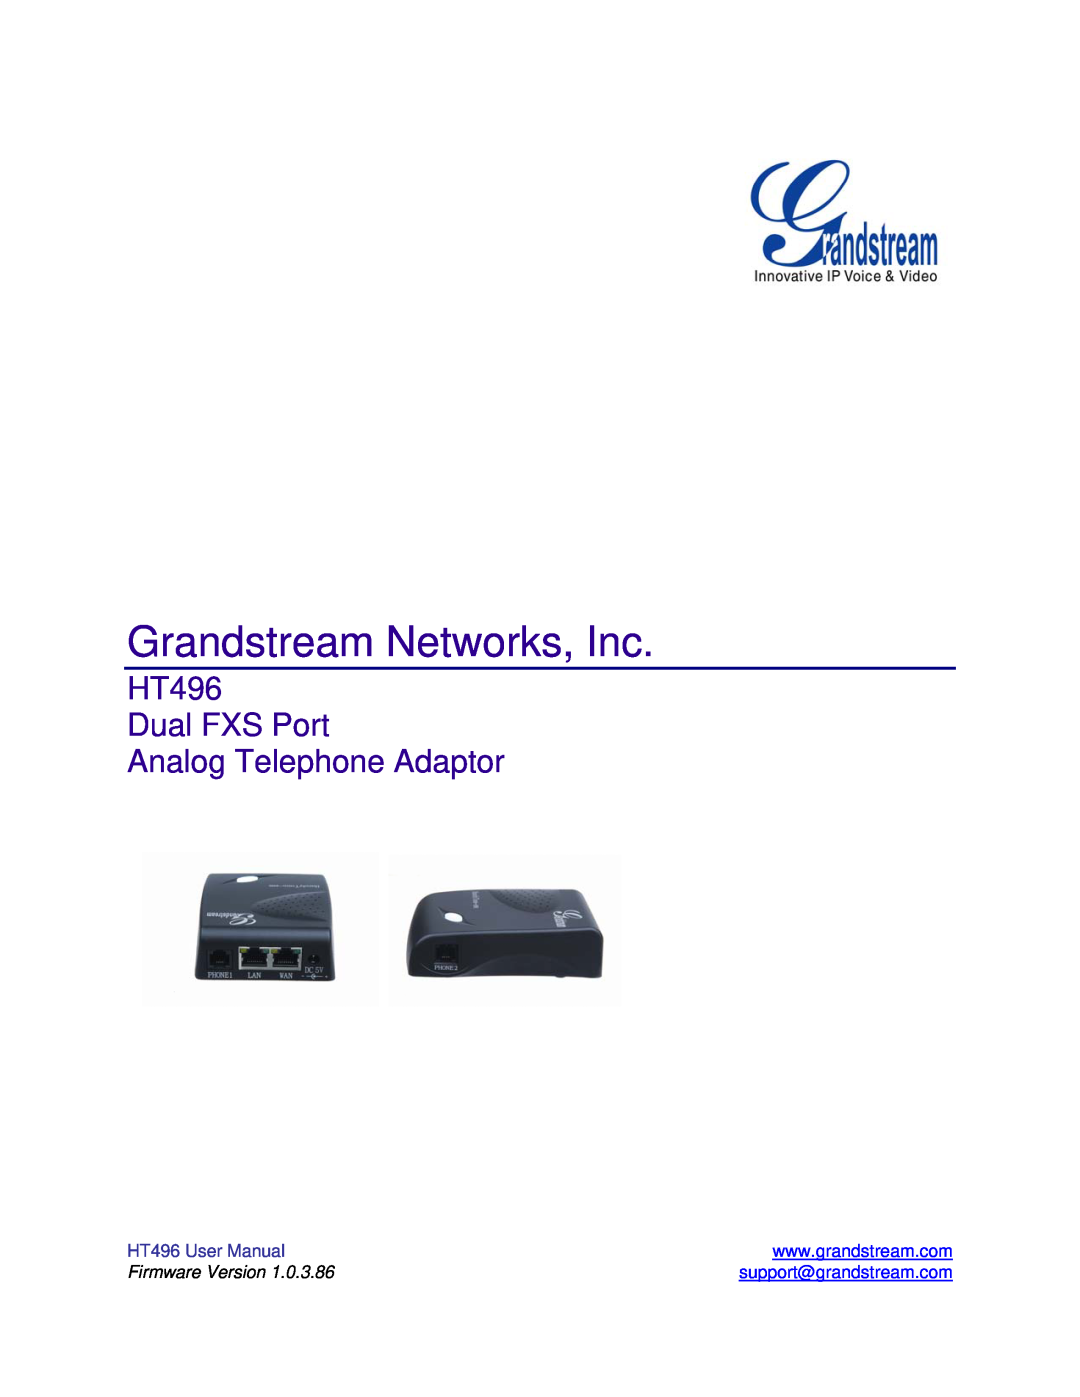 Grandstream Networks user manual Grandstream Networks, Inc, HT496 Dual FXS Port Analog Telephone Adaptor 